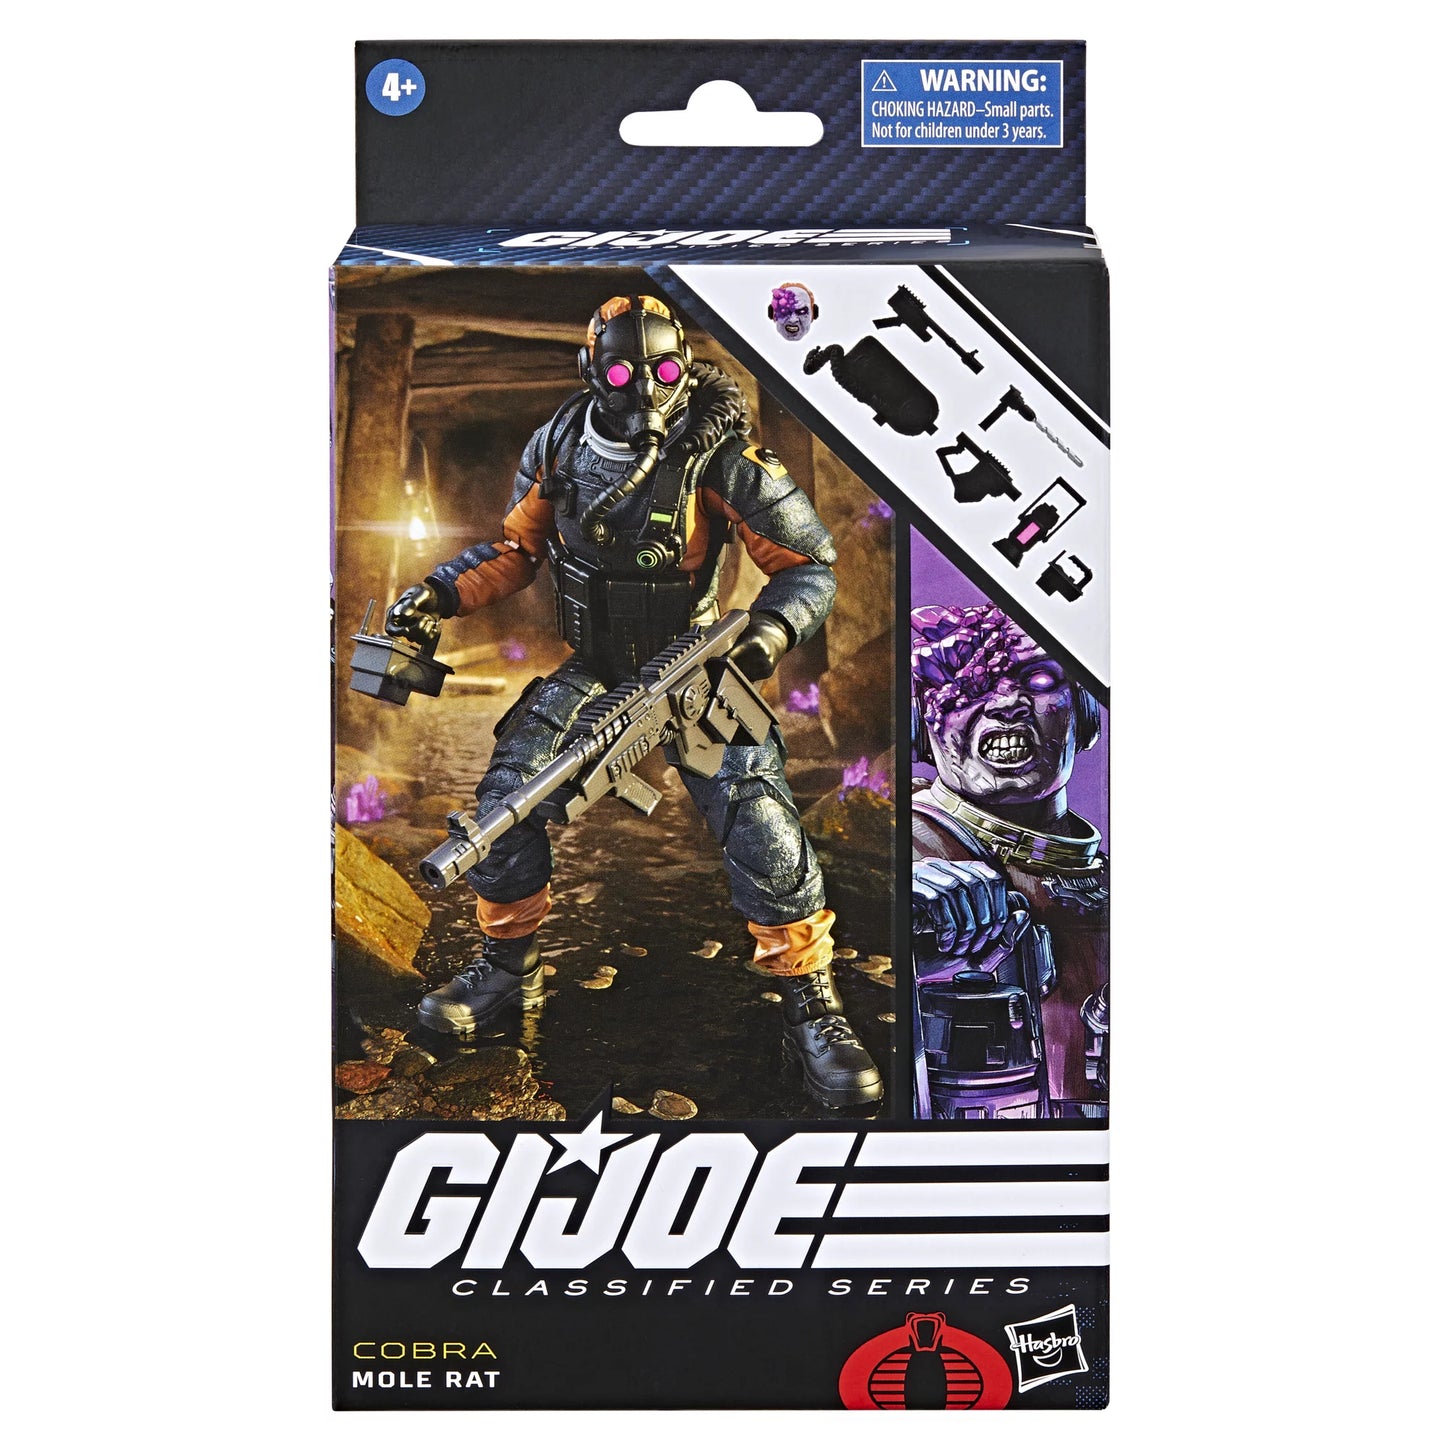 G.I. Joe Classified Series Mole Rat #94 Action Figure (6")